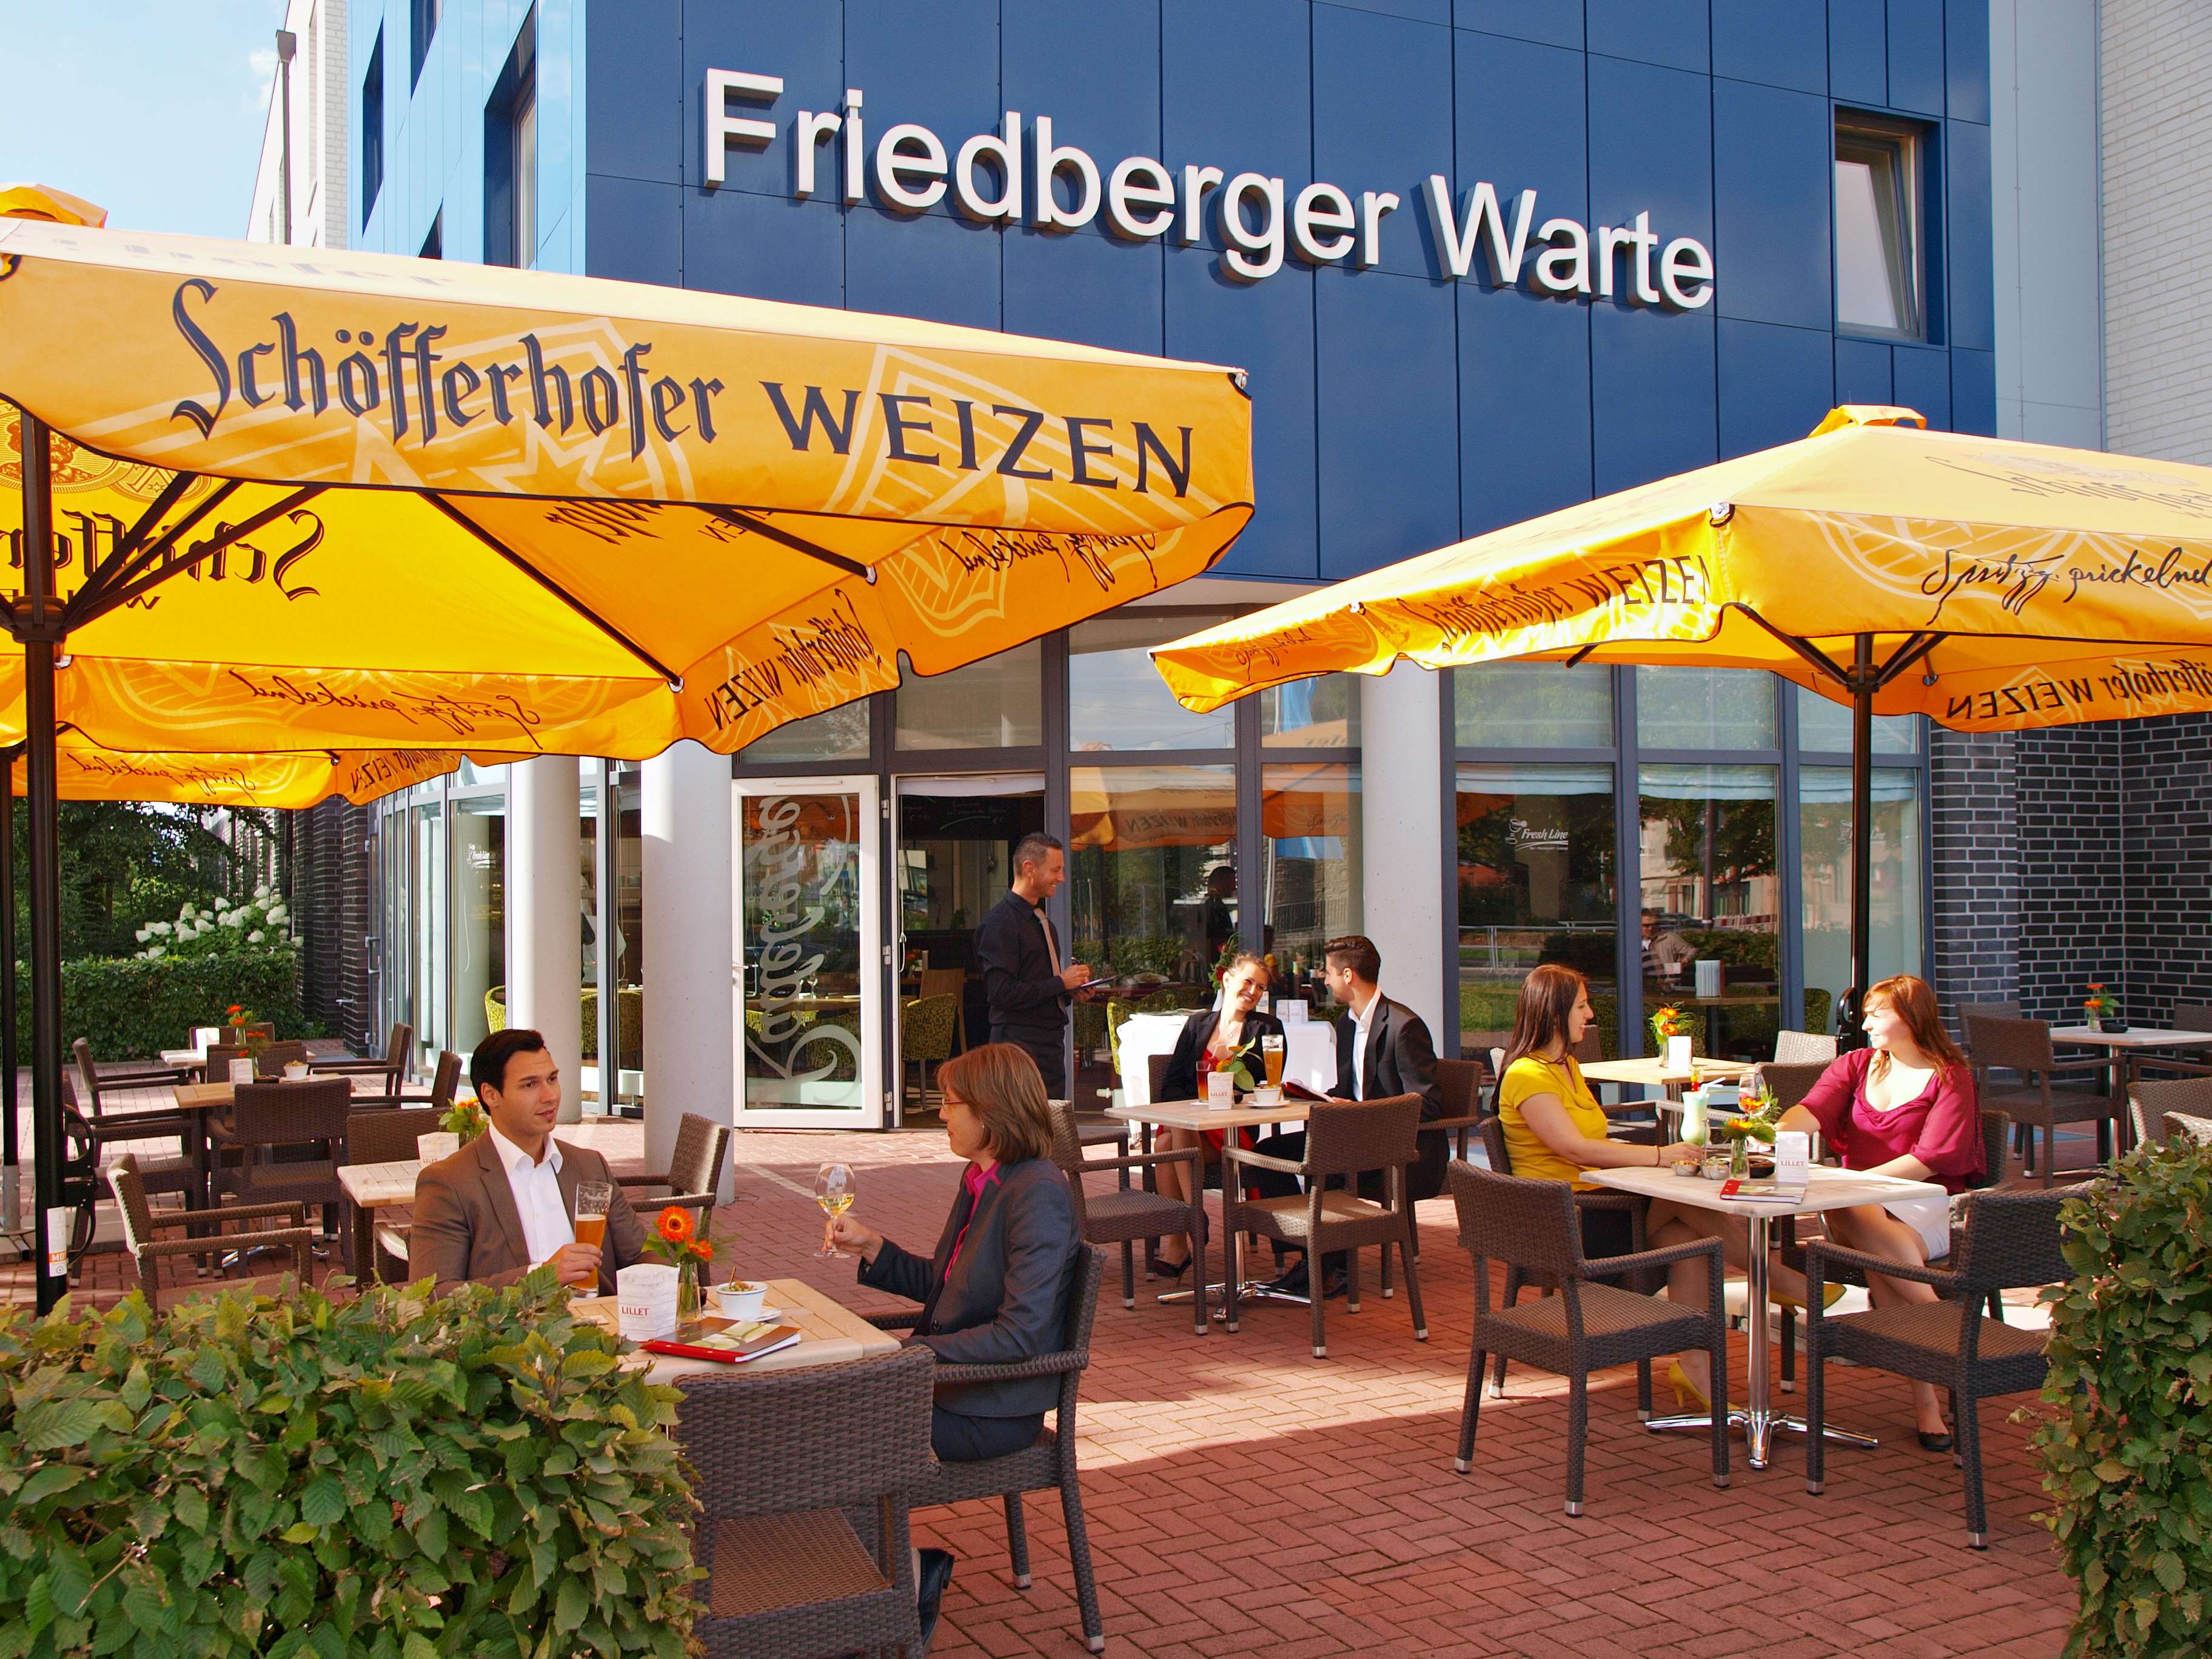 Best Western Premier Ib Hotel Friedberger Warte, Homburger Landstrasse 4 in Frankfurt